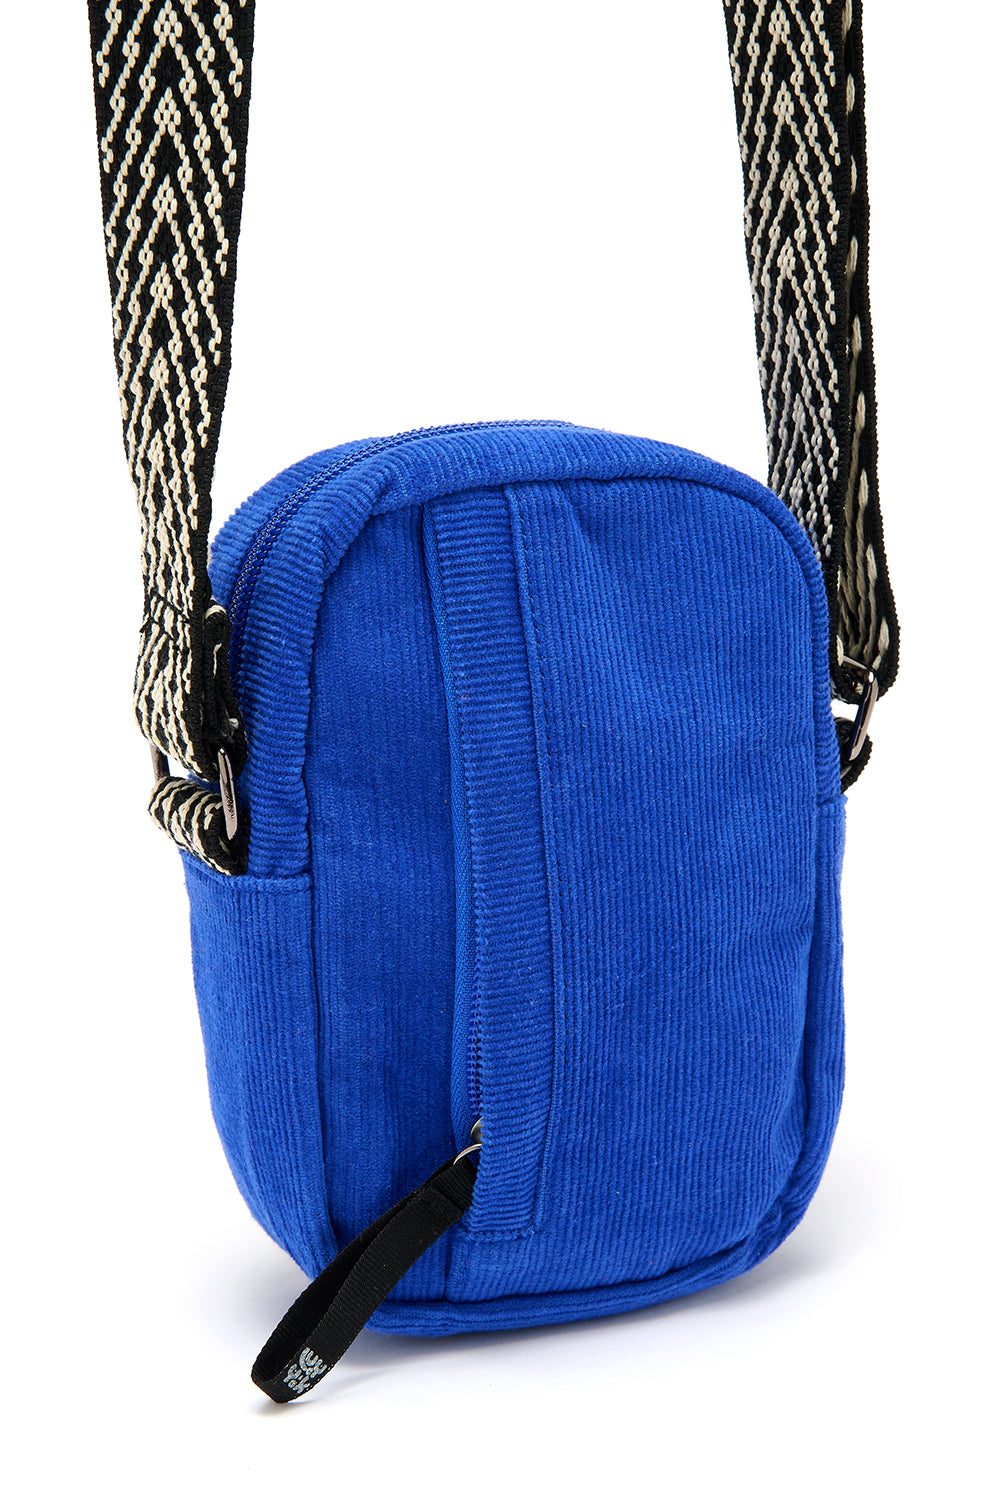 Brady Bag: ORGANIC CORDUROY - Cobalt Blue